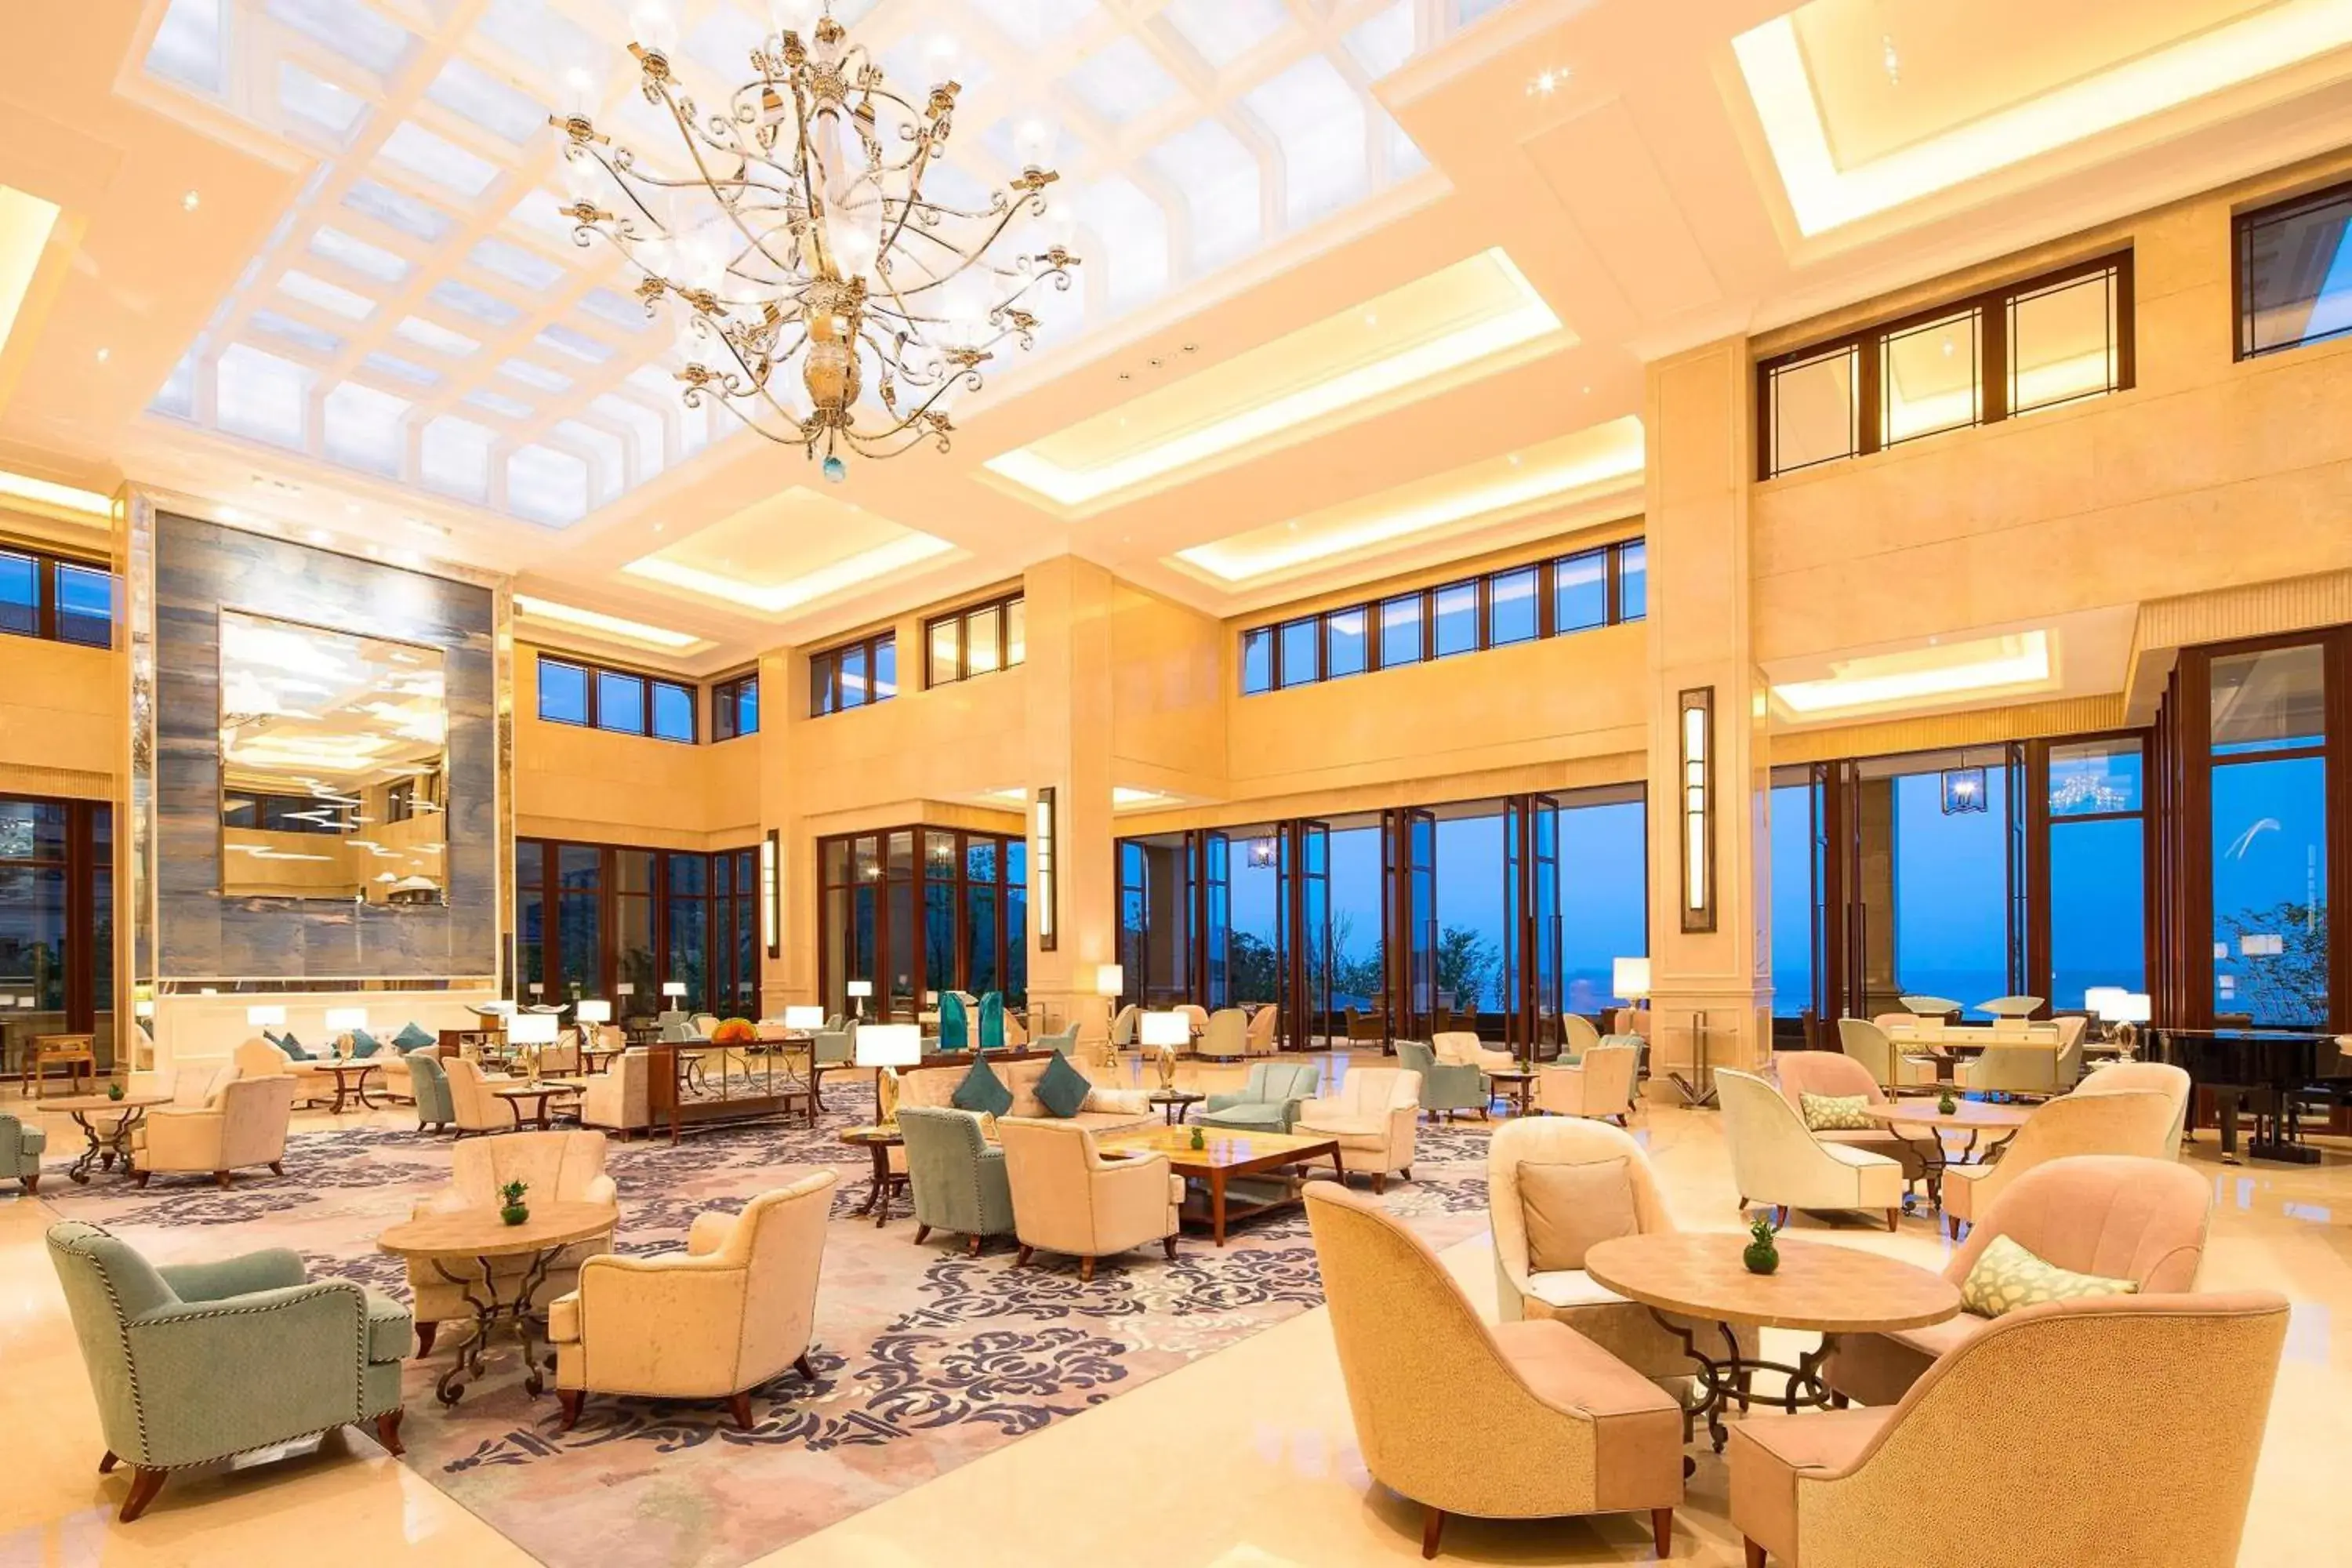 Lobby or reception, Restaurant/Places to Eat in The Westin Zhujiajian Resort, Zhoushan